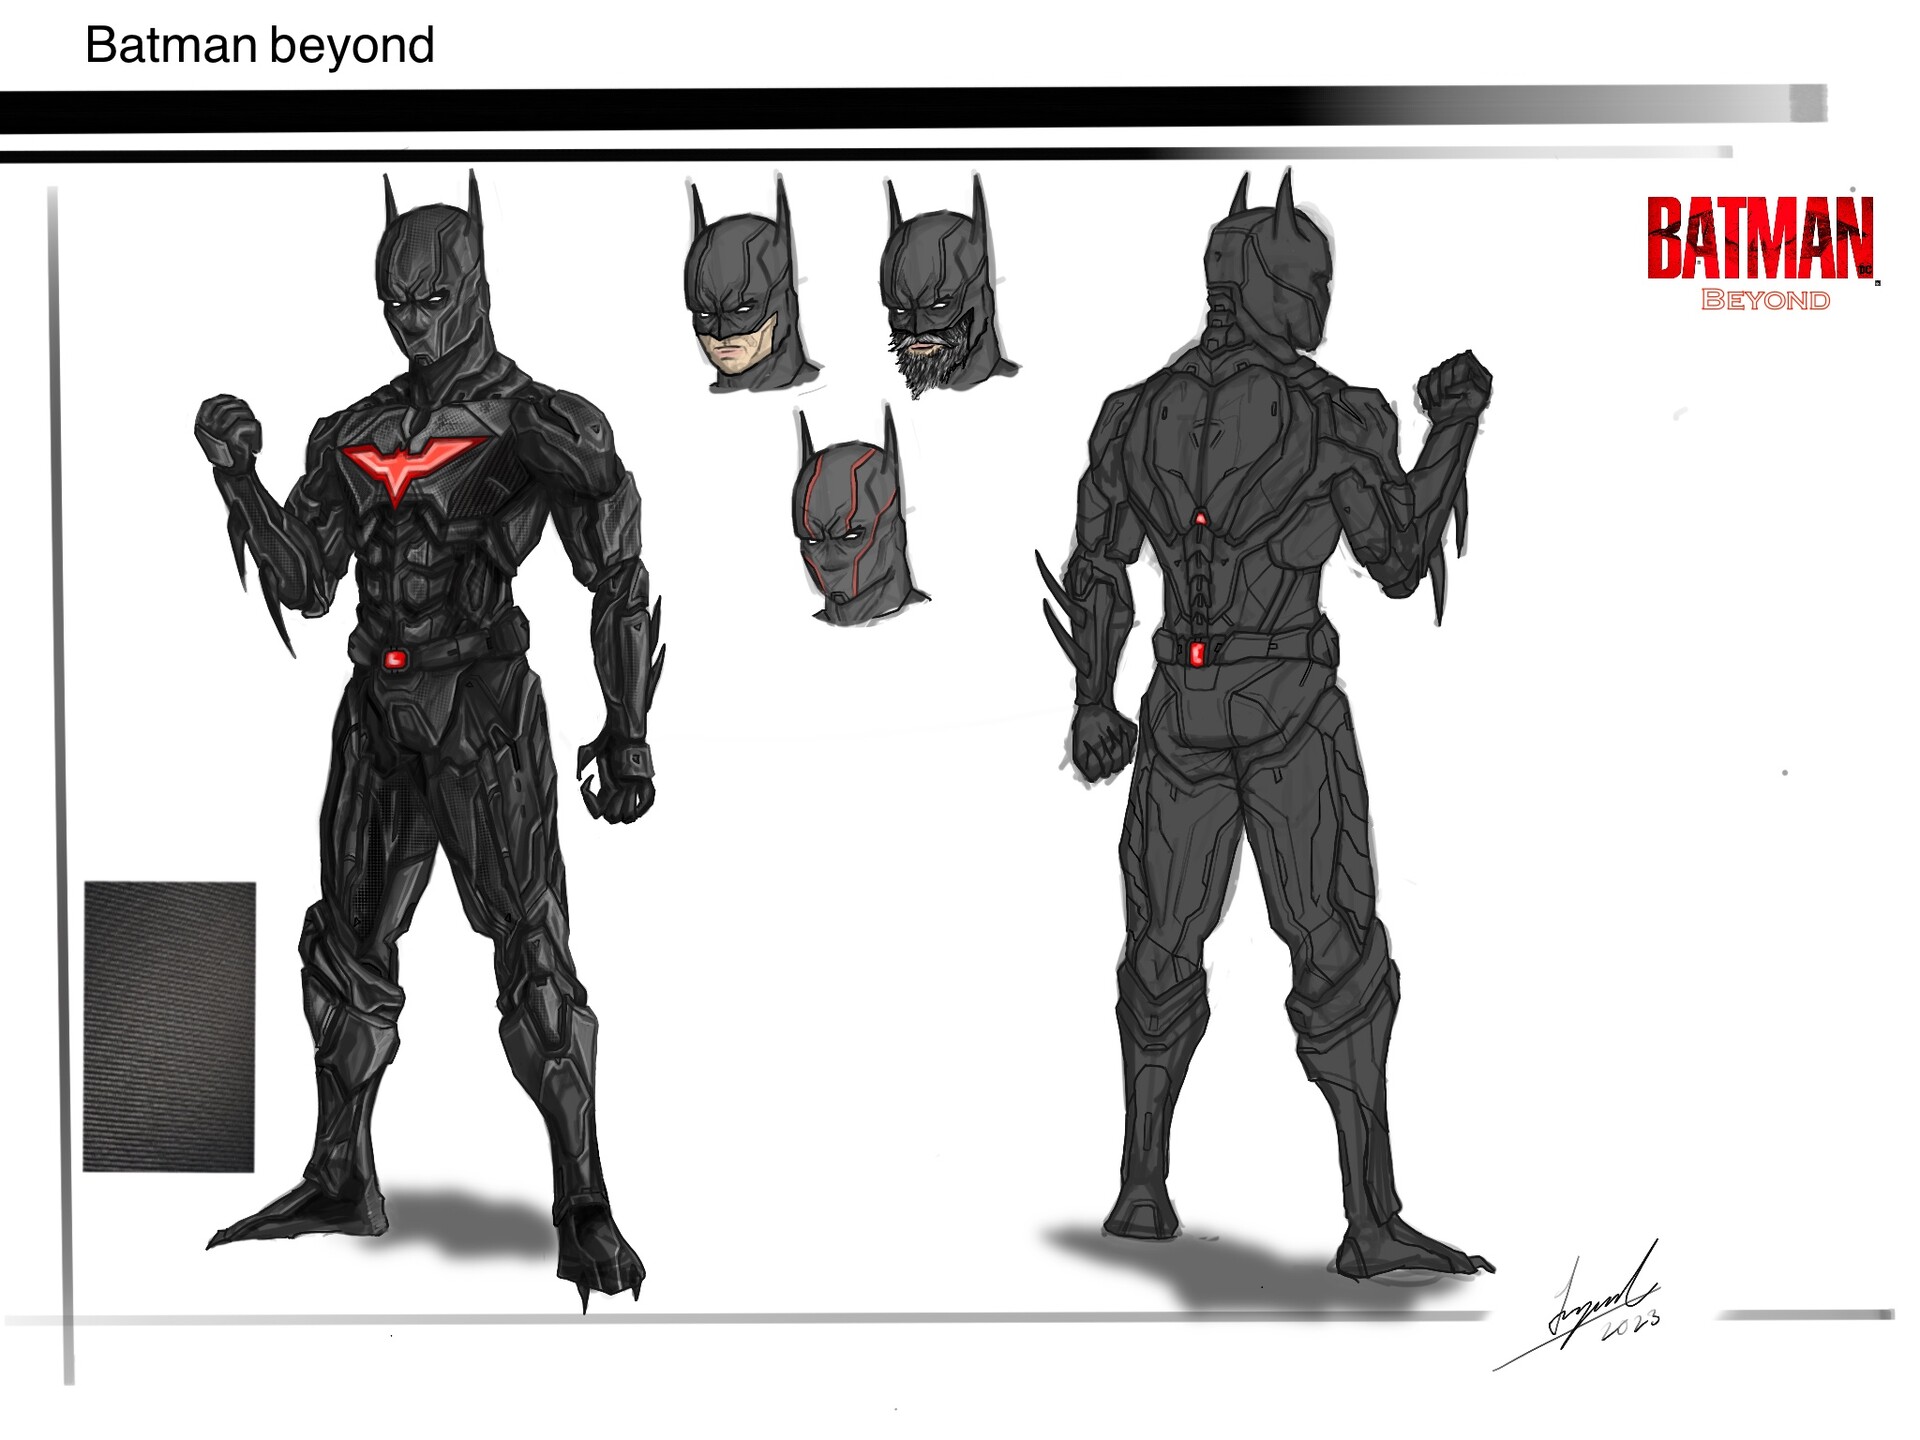 ArtStation - Batman Beyond - concept art